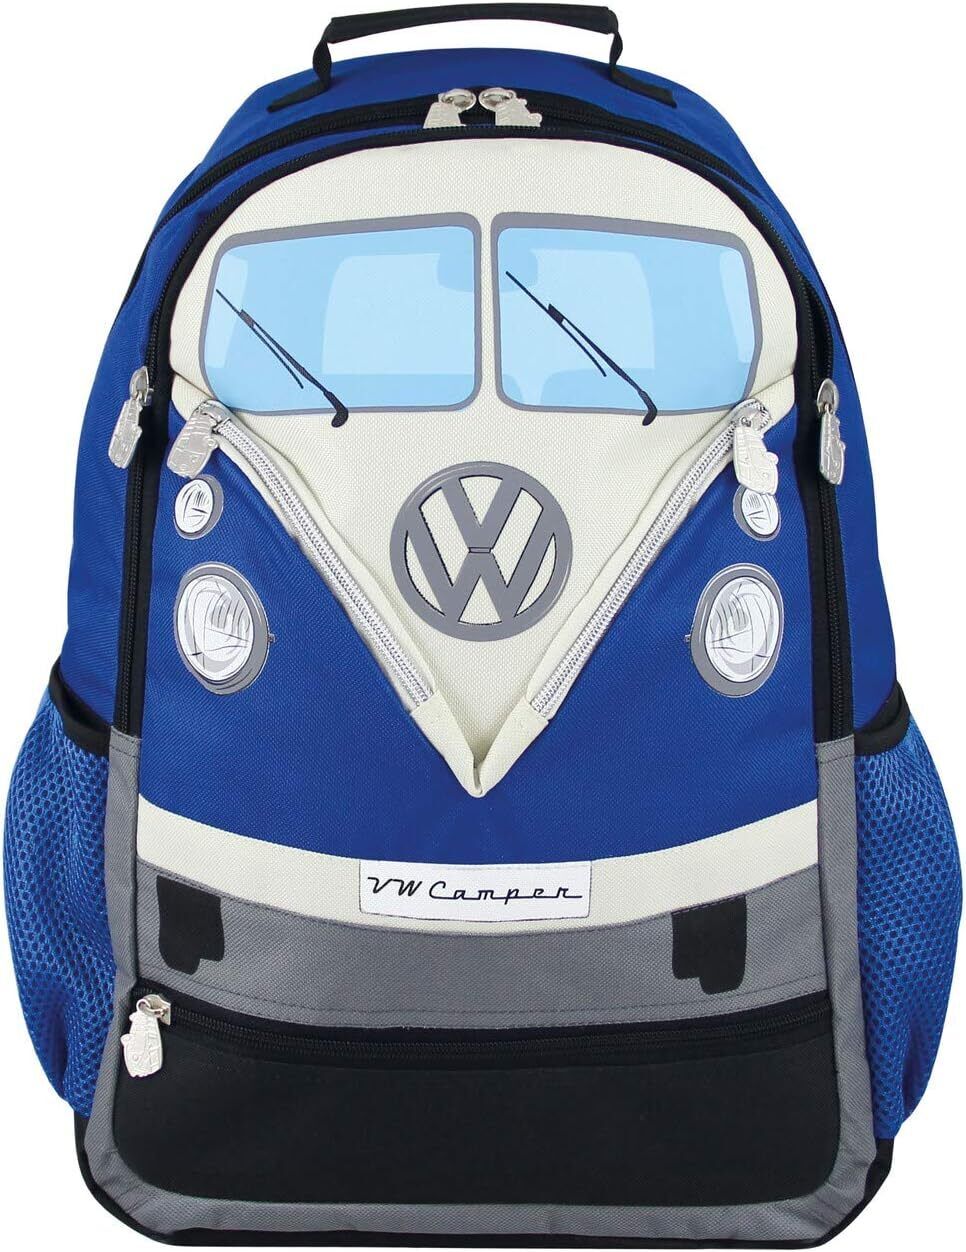 BRISA VW Collection - Volkswagen Hippie Bus T1 School, 30 litre volume, Blue 